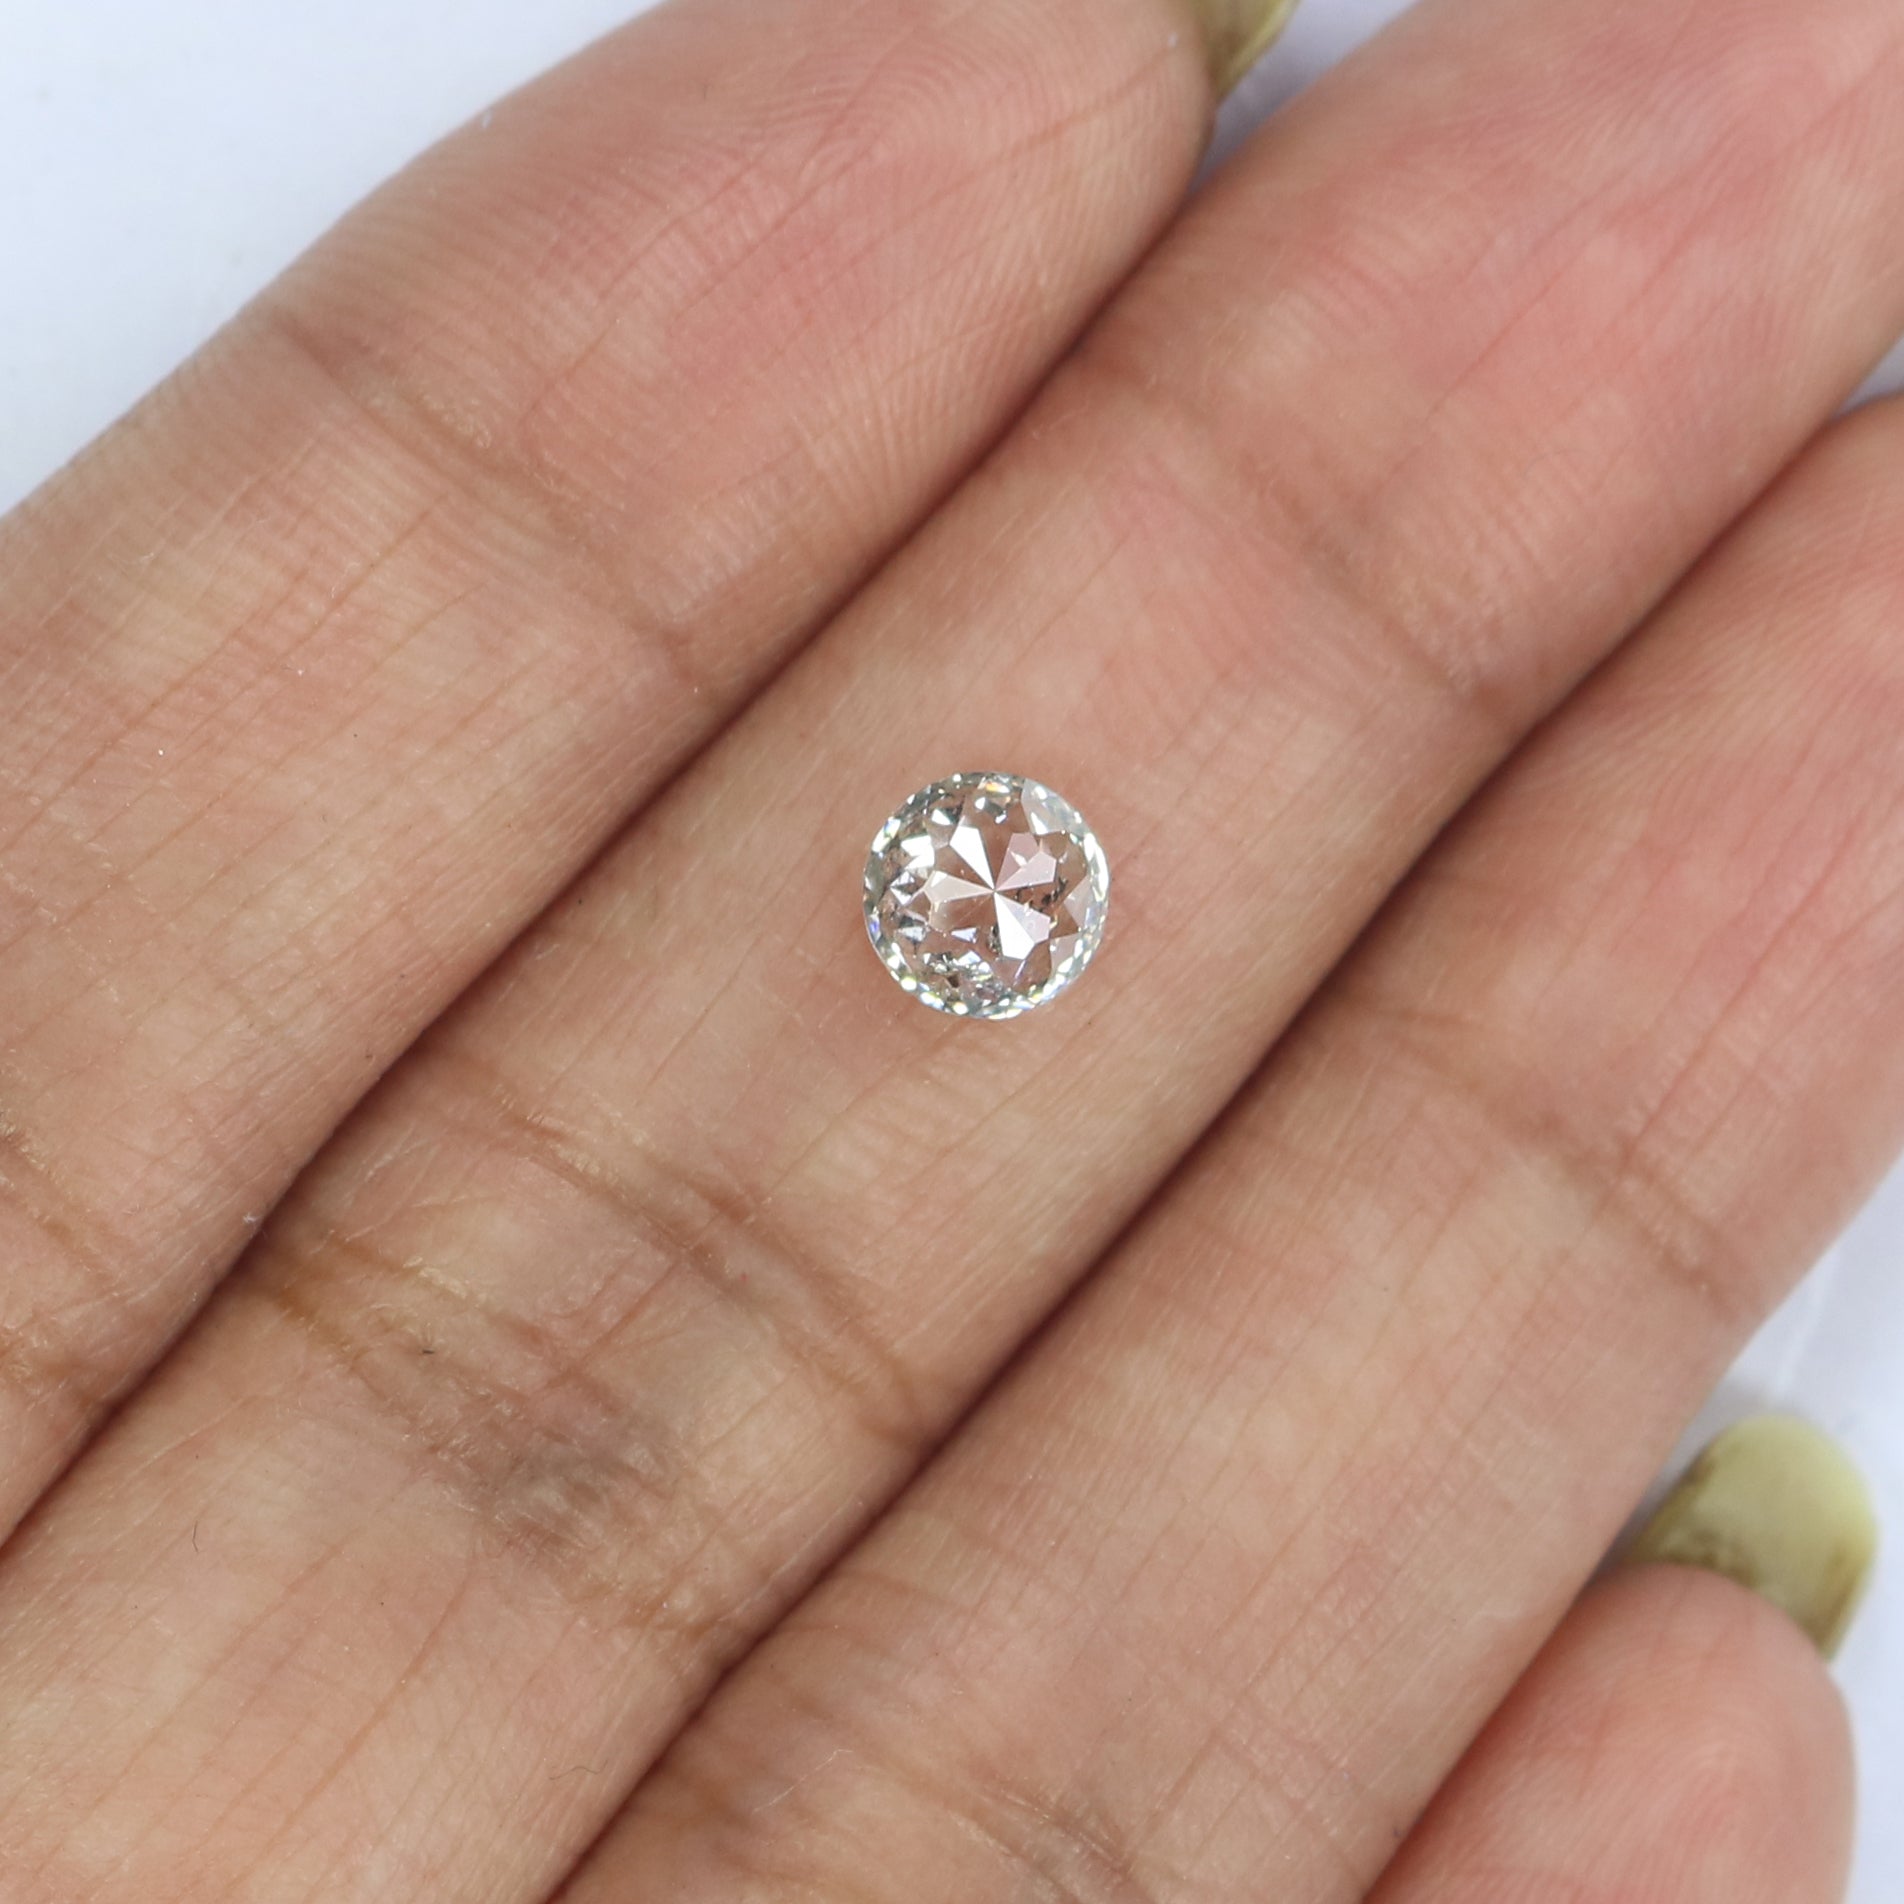 Natural Loose Round Rose Cut Diamond White - G Color 0.63 CT 5.41 MM Round Shape Rose Cut Diamond KDL2684